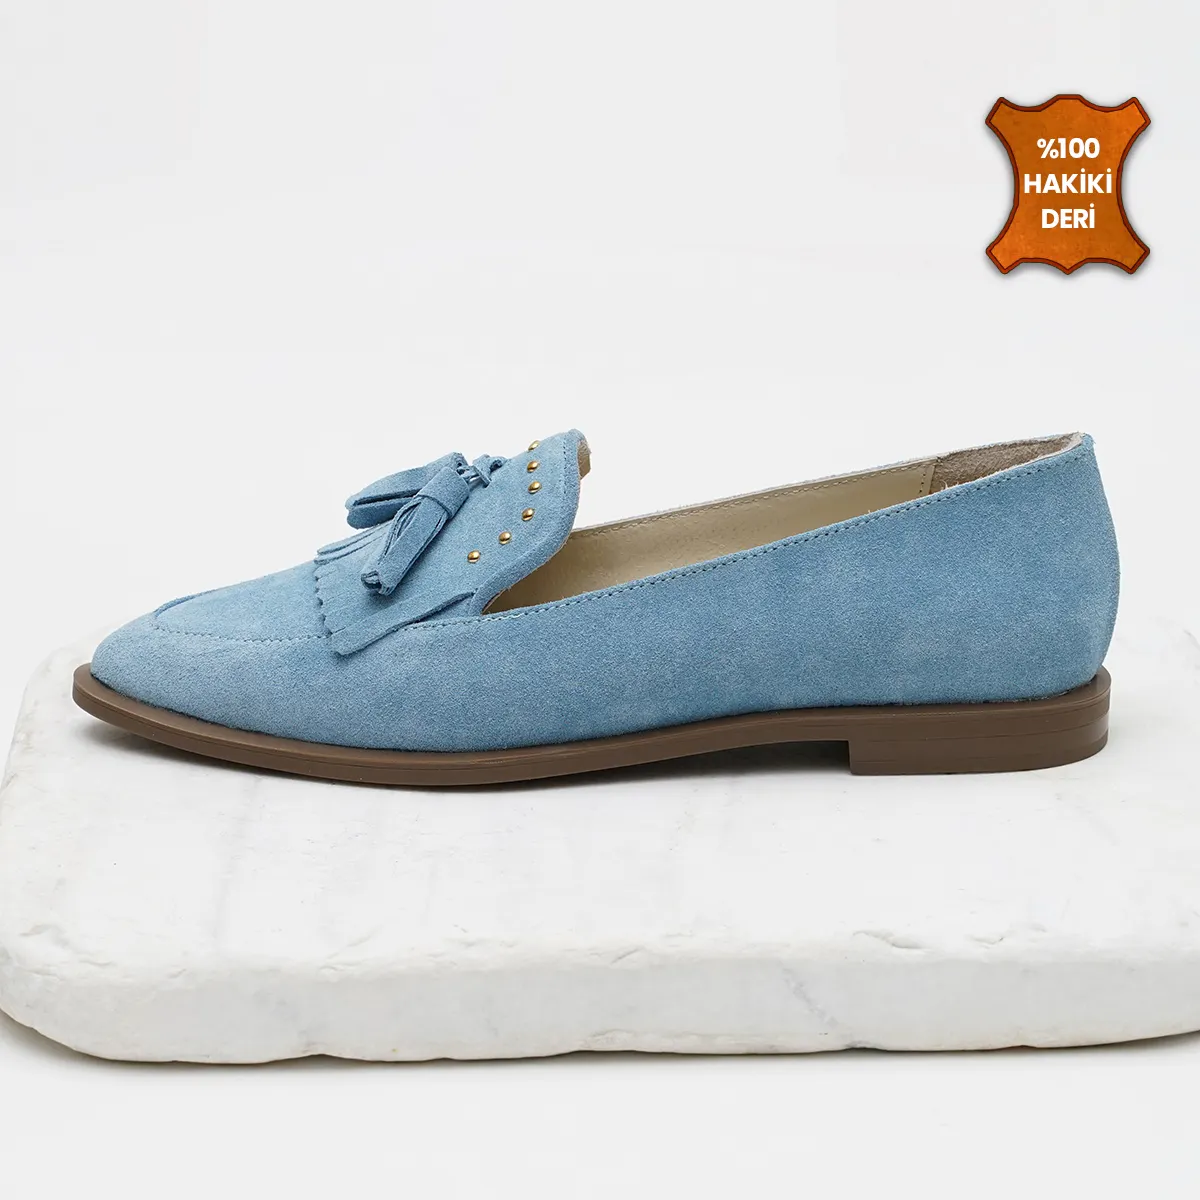 Mio Gusto Brand Brianna Blue Genuine Suede Leather 2cm Heel-Height Women 's Low Heel Loafer Shoe Ladies Fashion